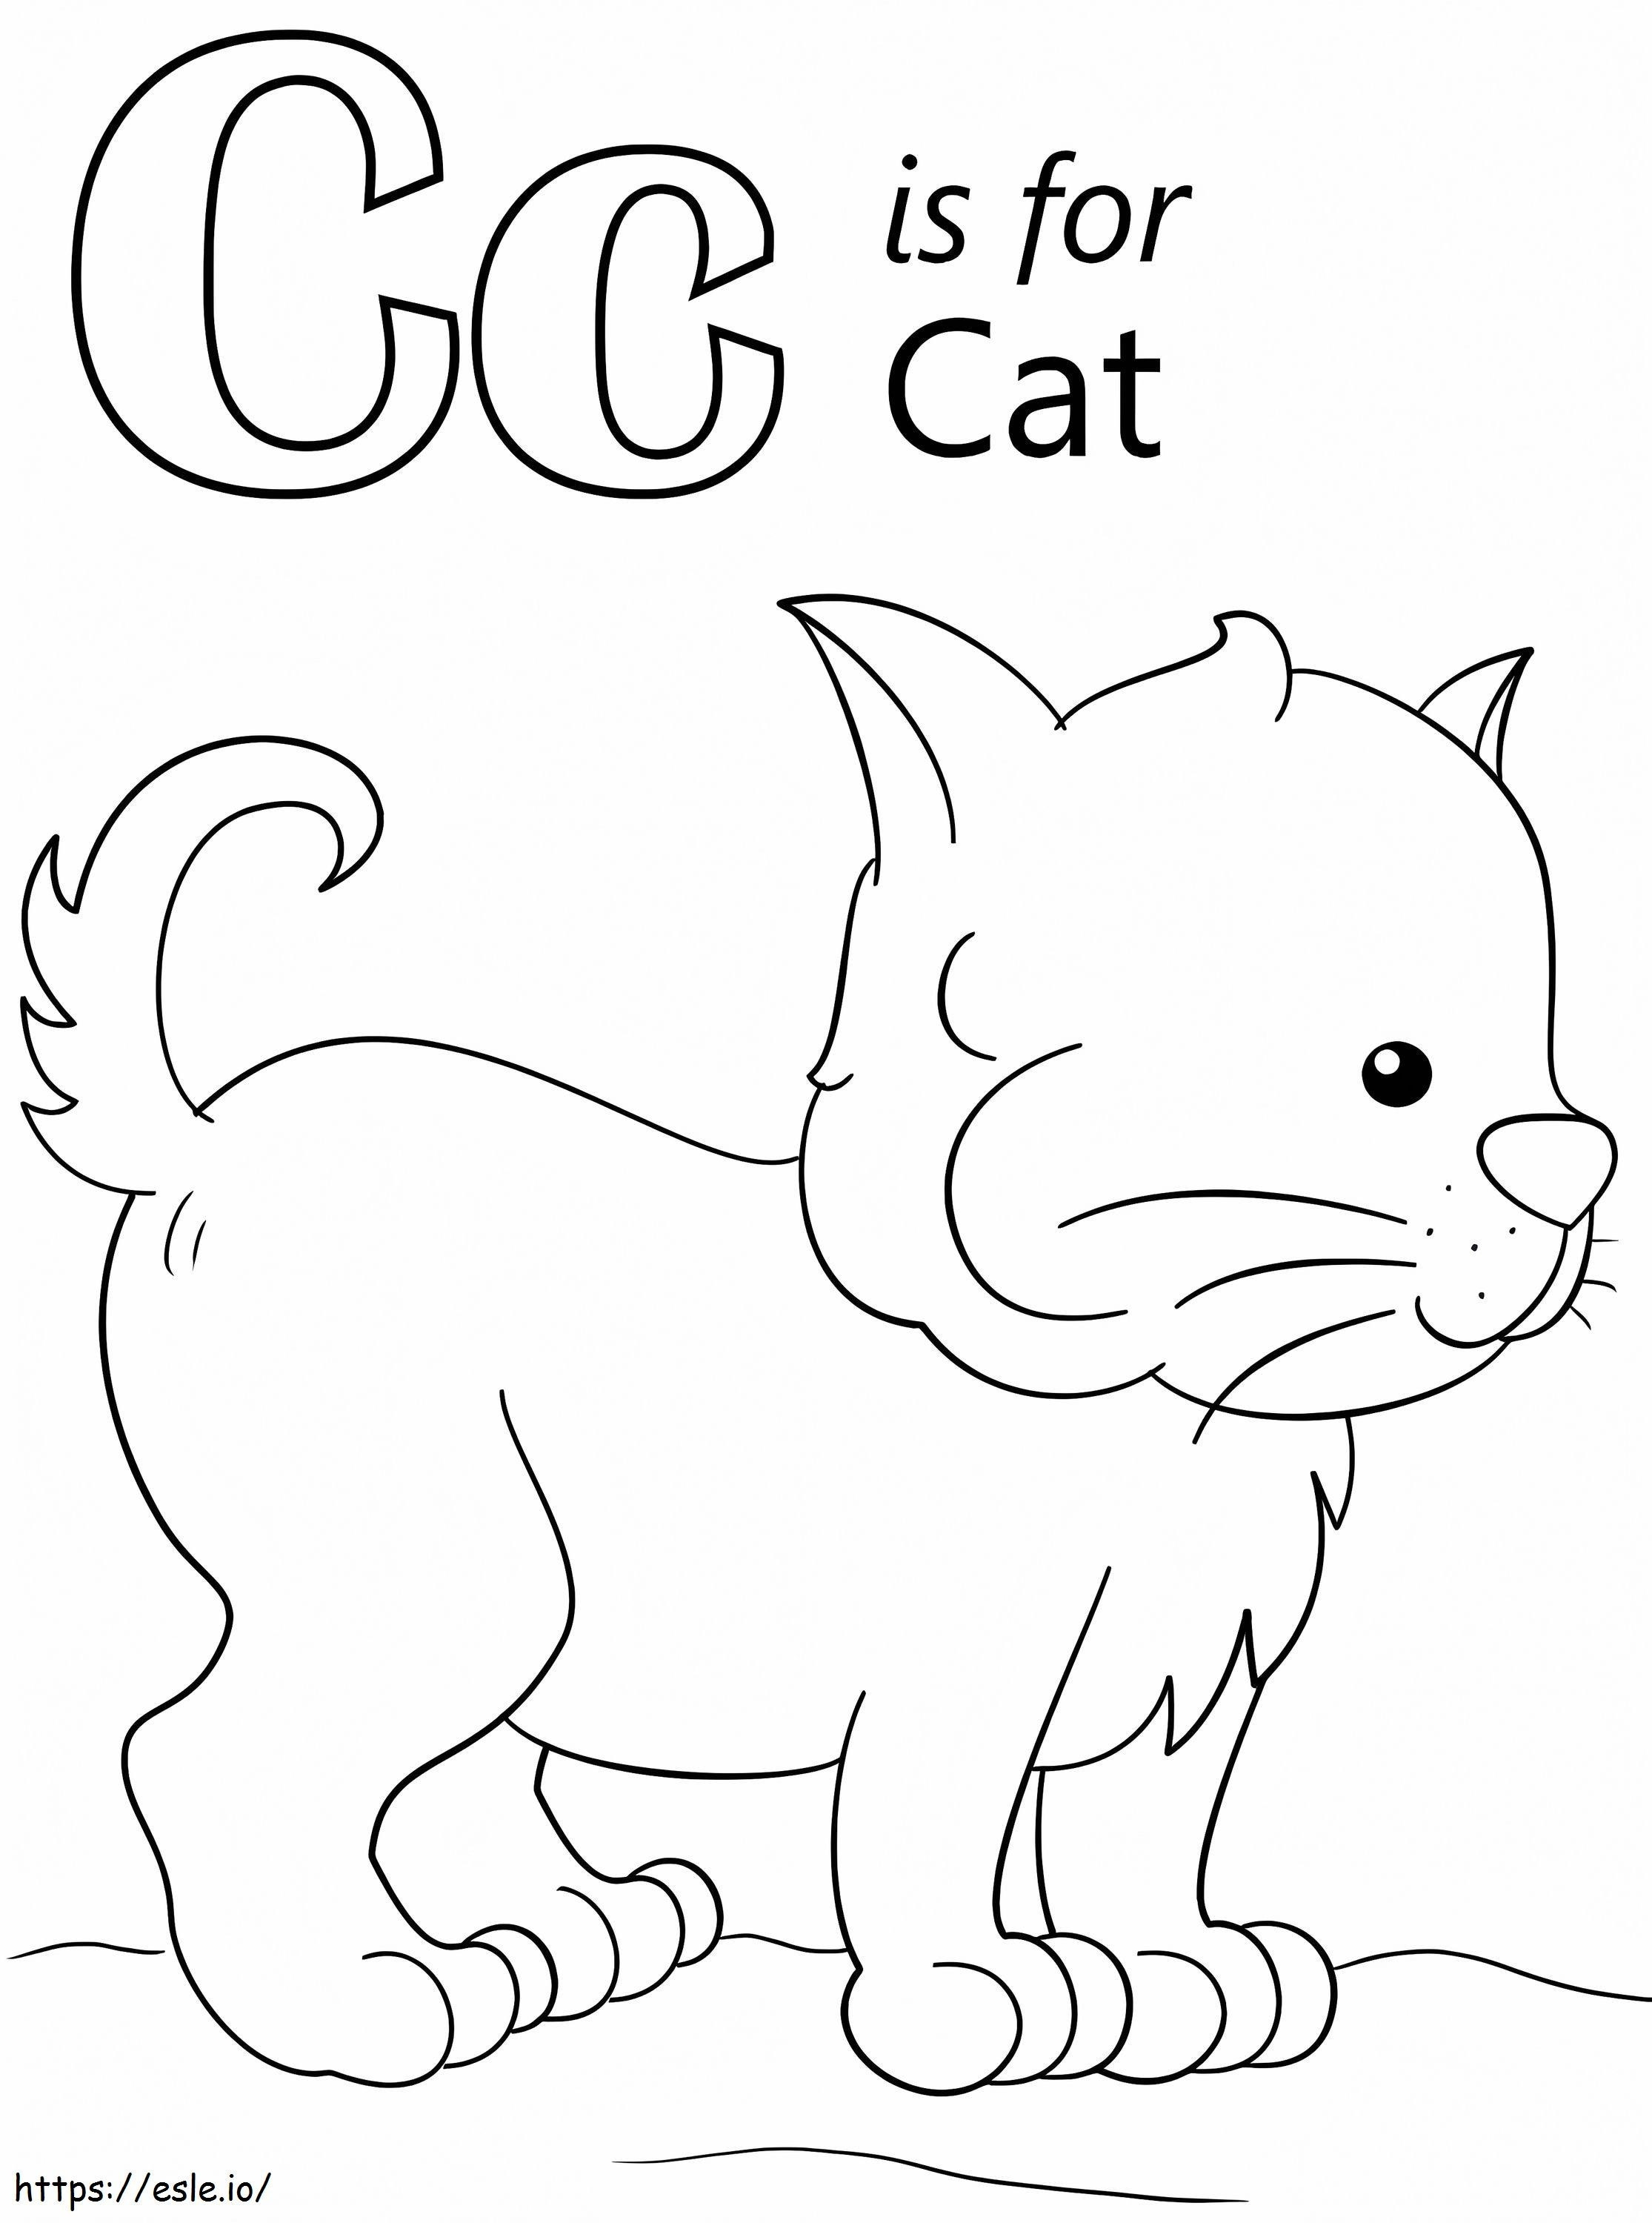 Gato Letra C para colorear